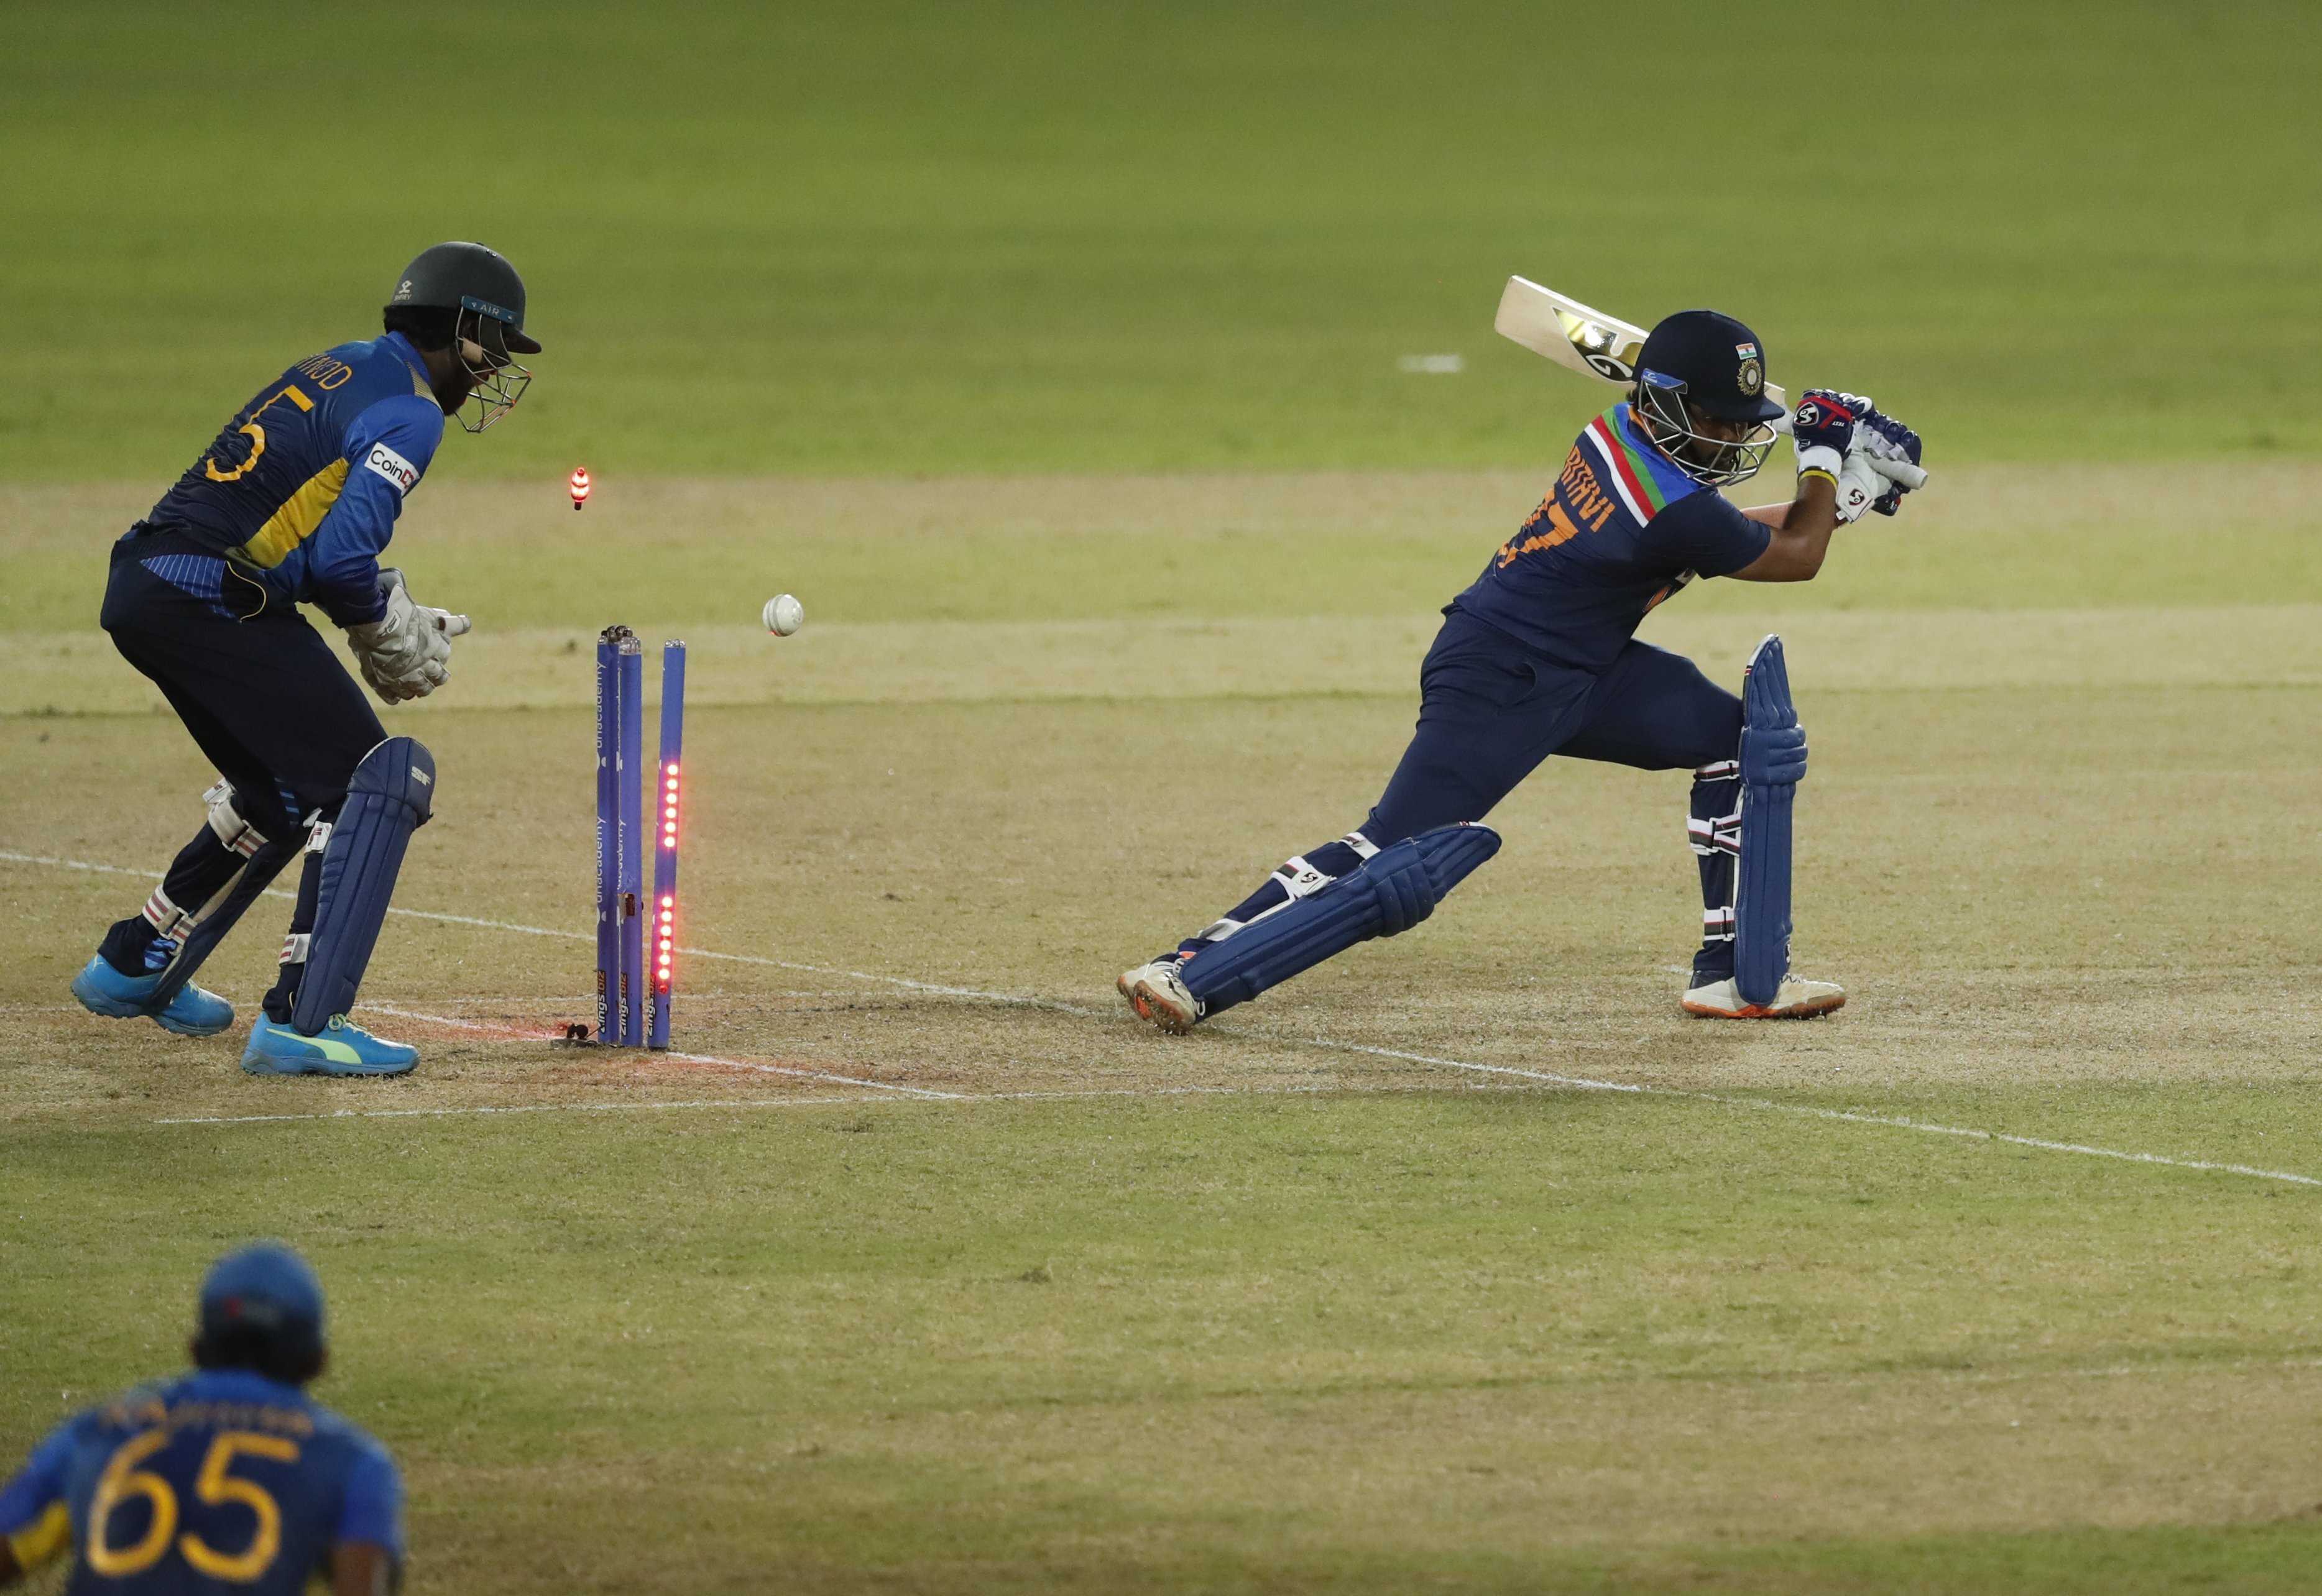 SL vs IND | 2nd ODI Takeaways - Minod Bhanuka’s marked improvement and Shaw’s spin struggles	